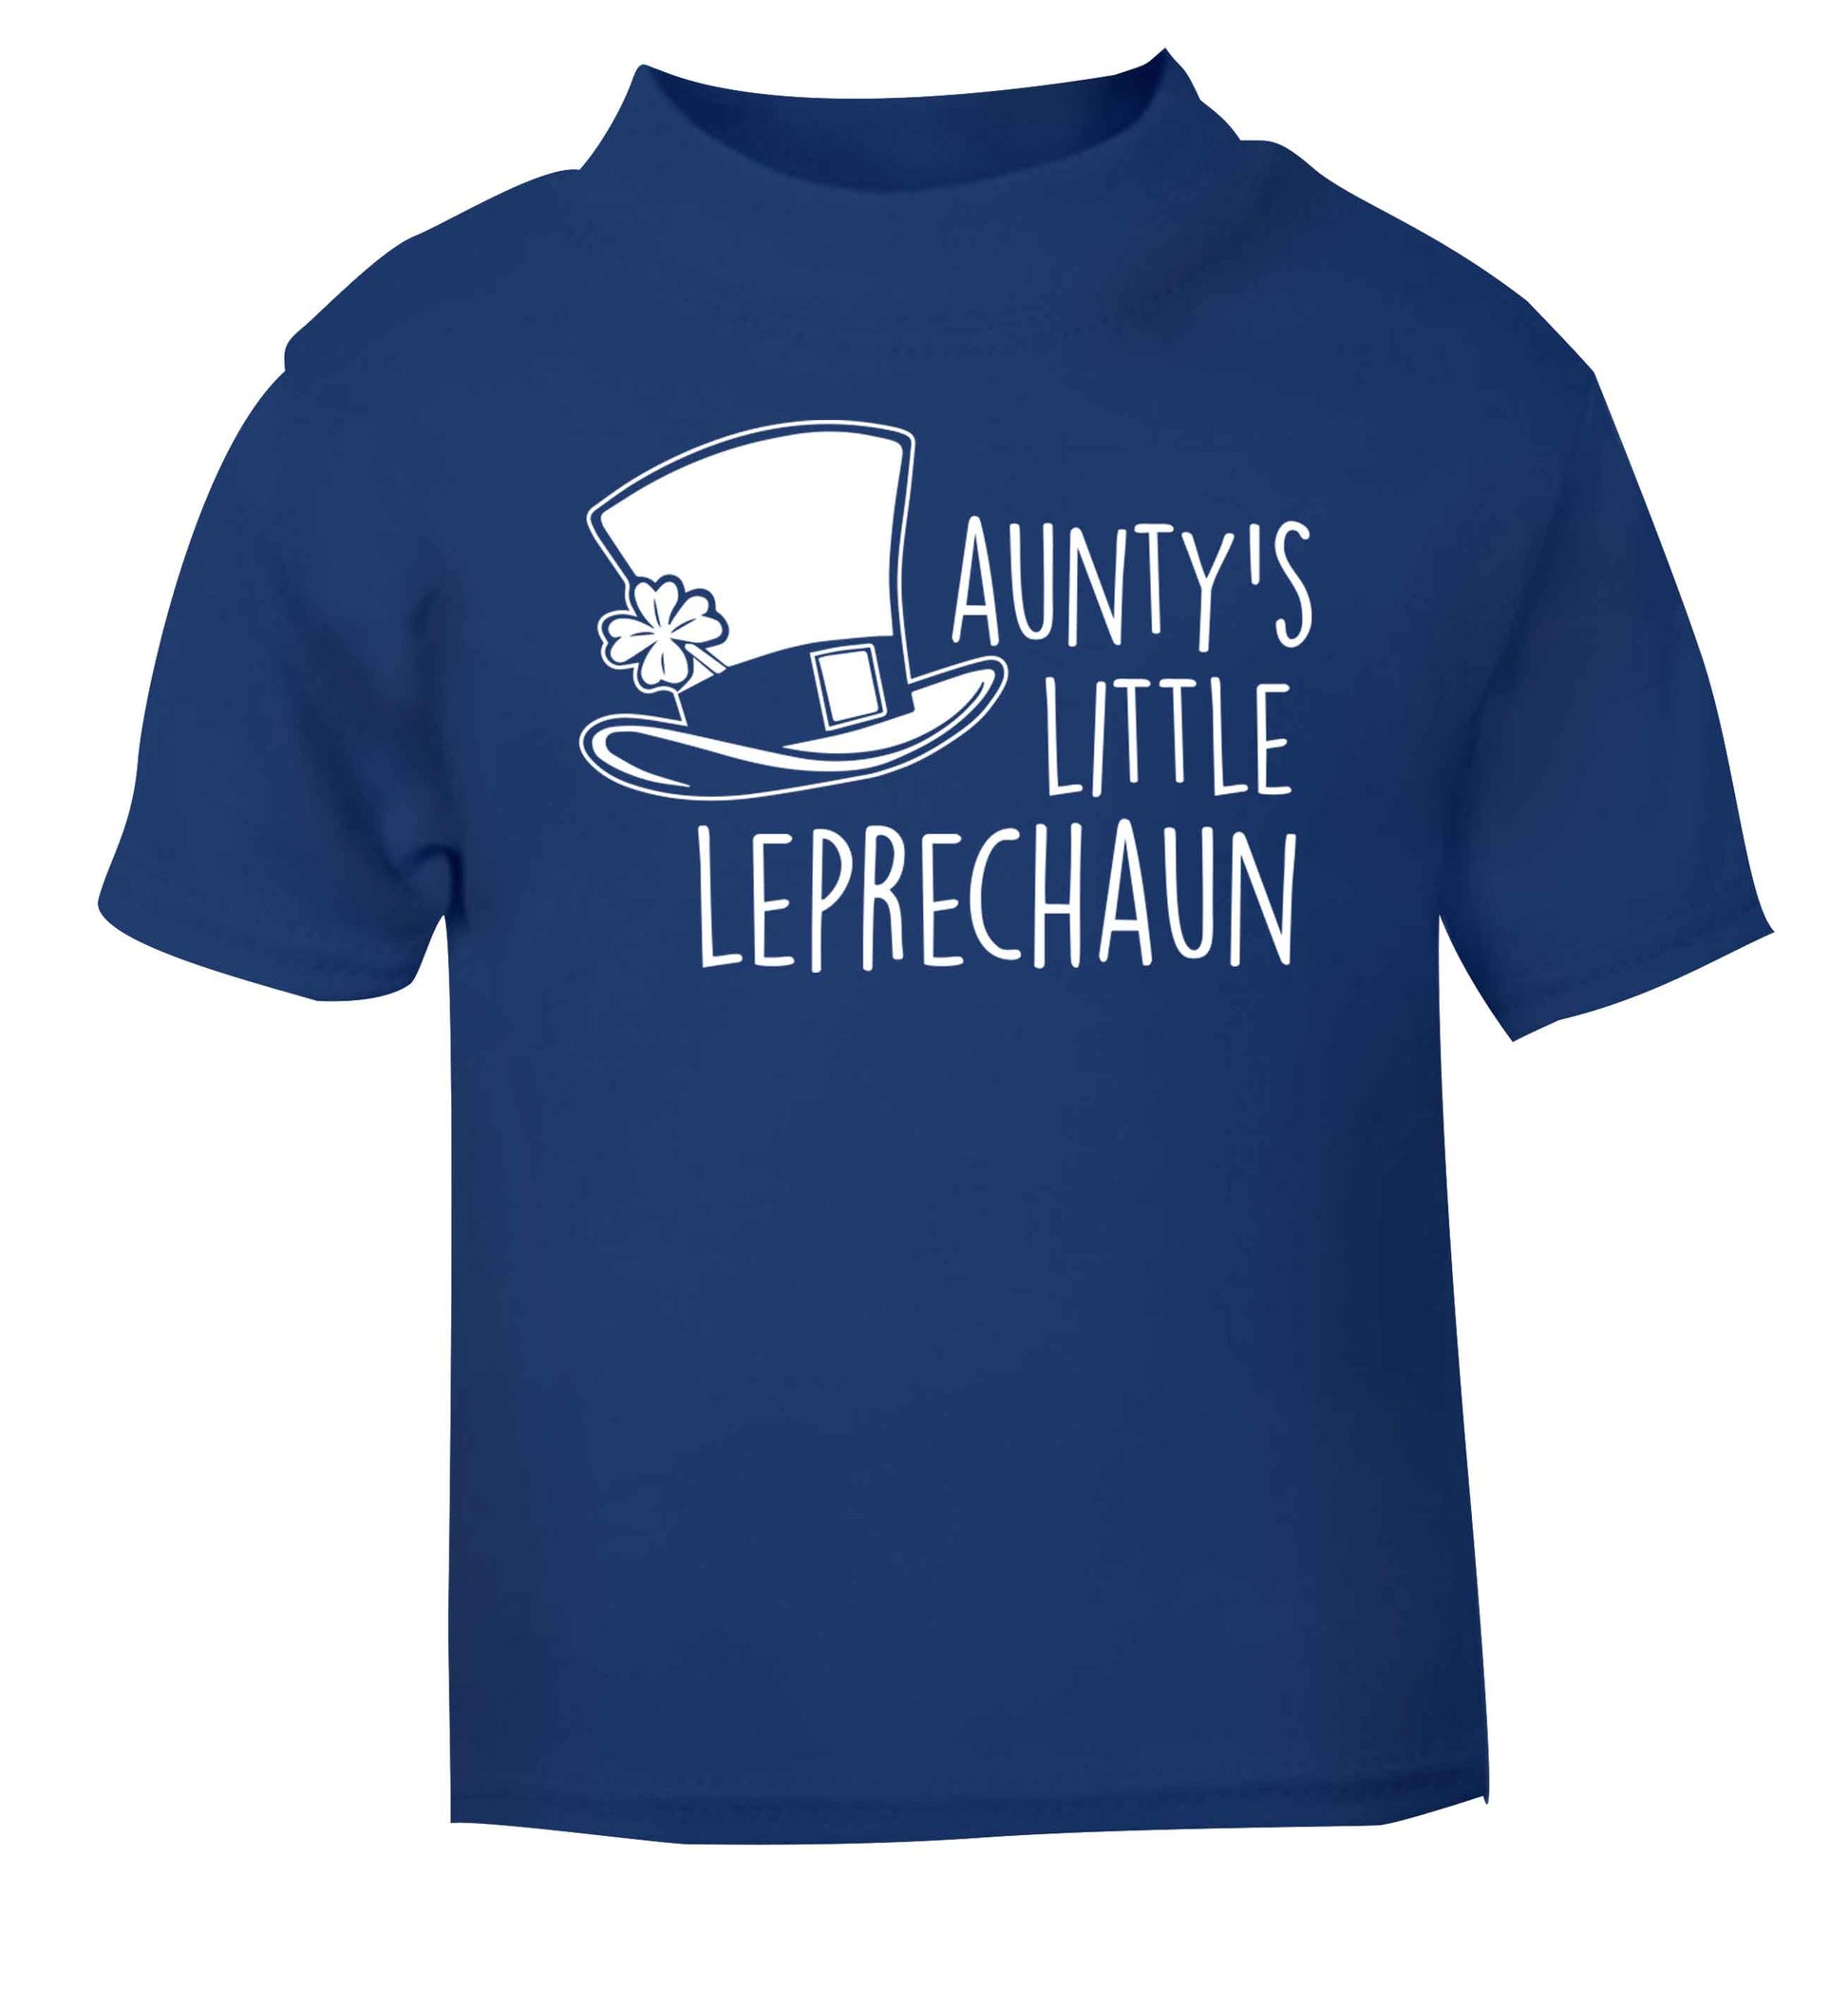 Aunty's little leprechaun blue baby toddler Tshirt 2 Years